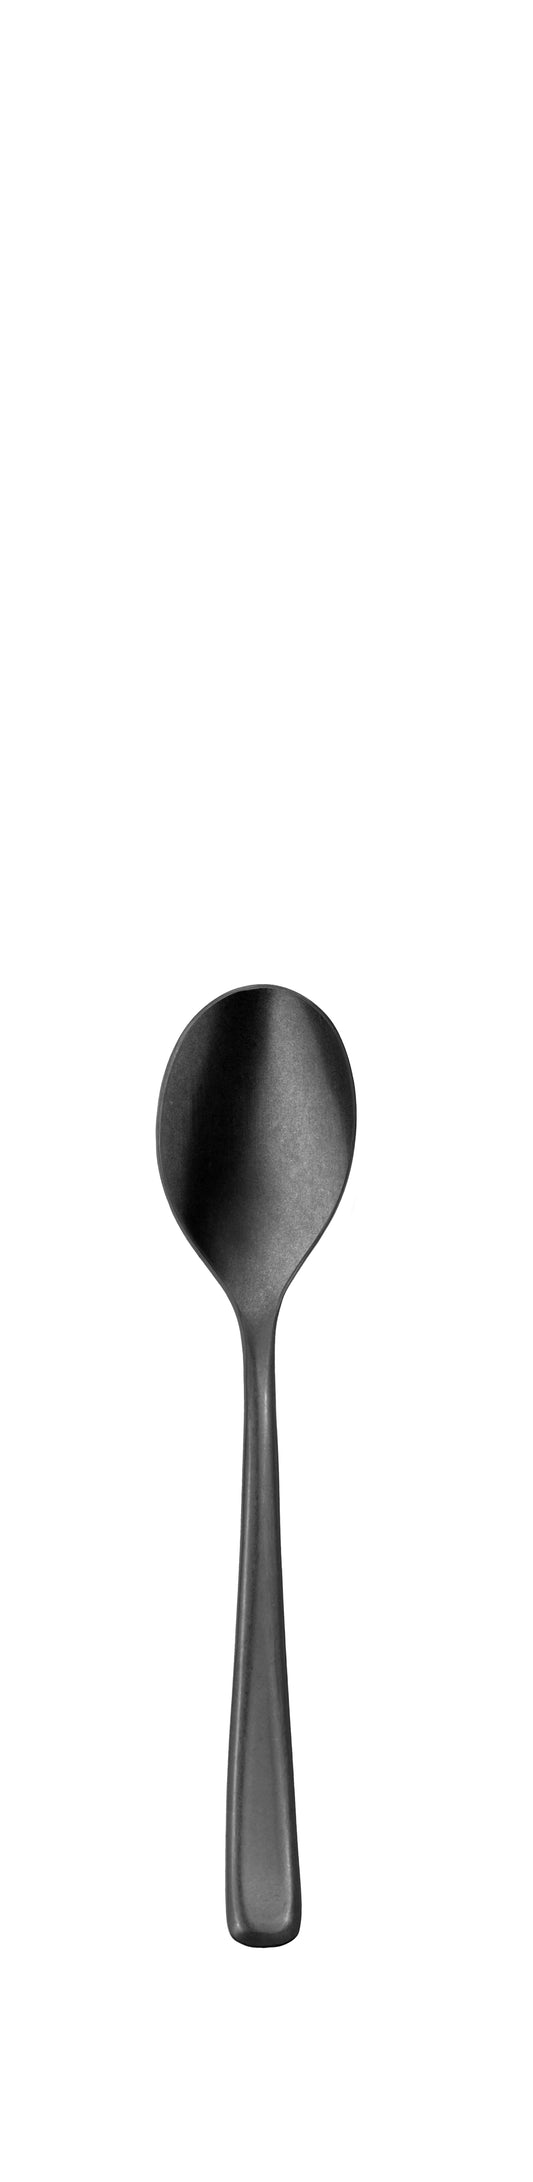 Coffee spoon MEDAN PVD gun metal stonewashed 136 mm